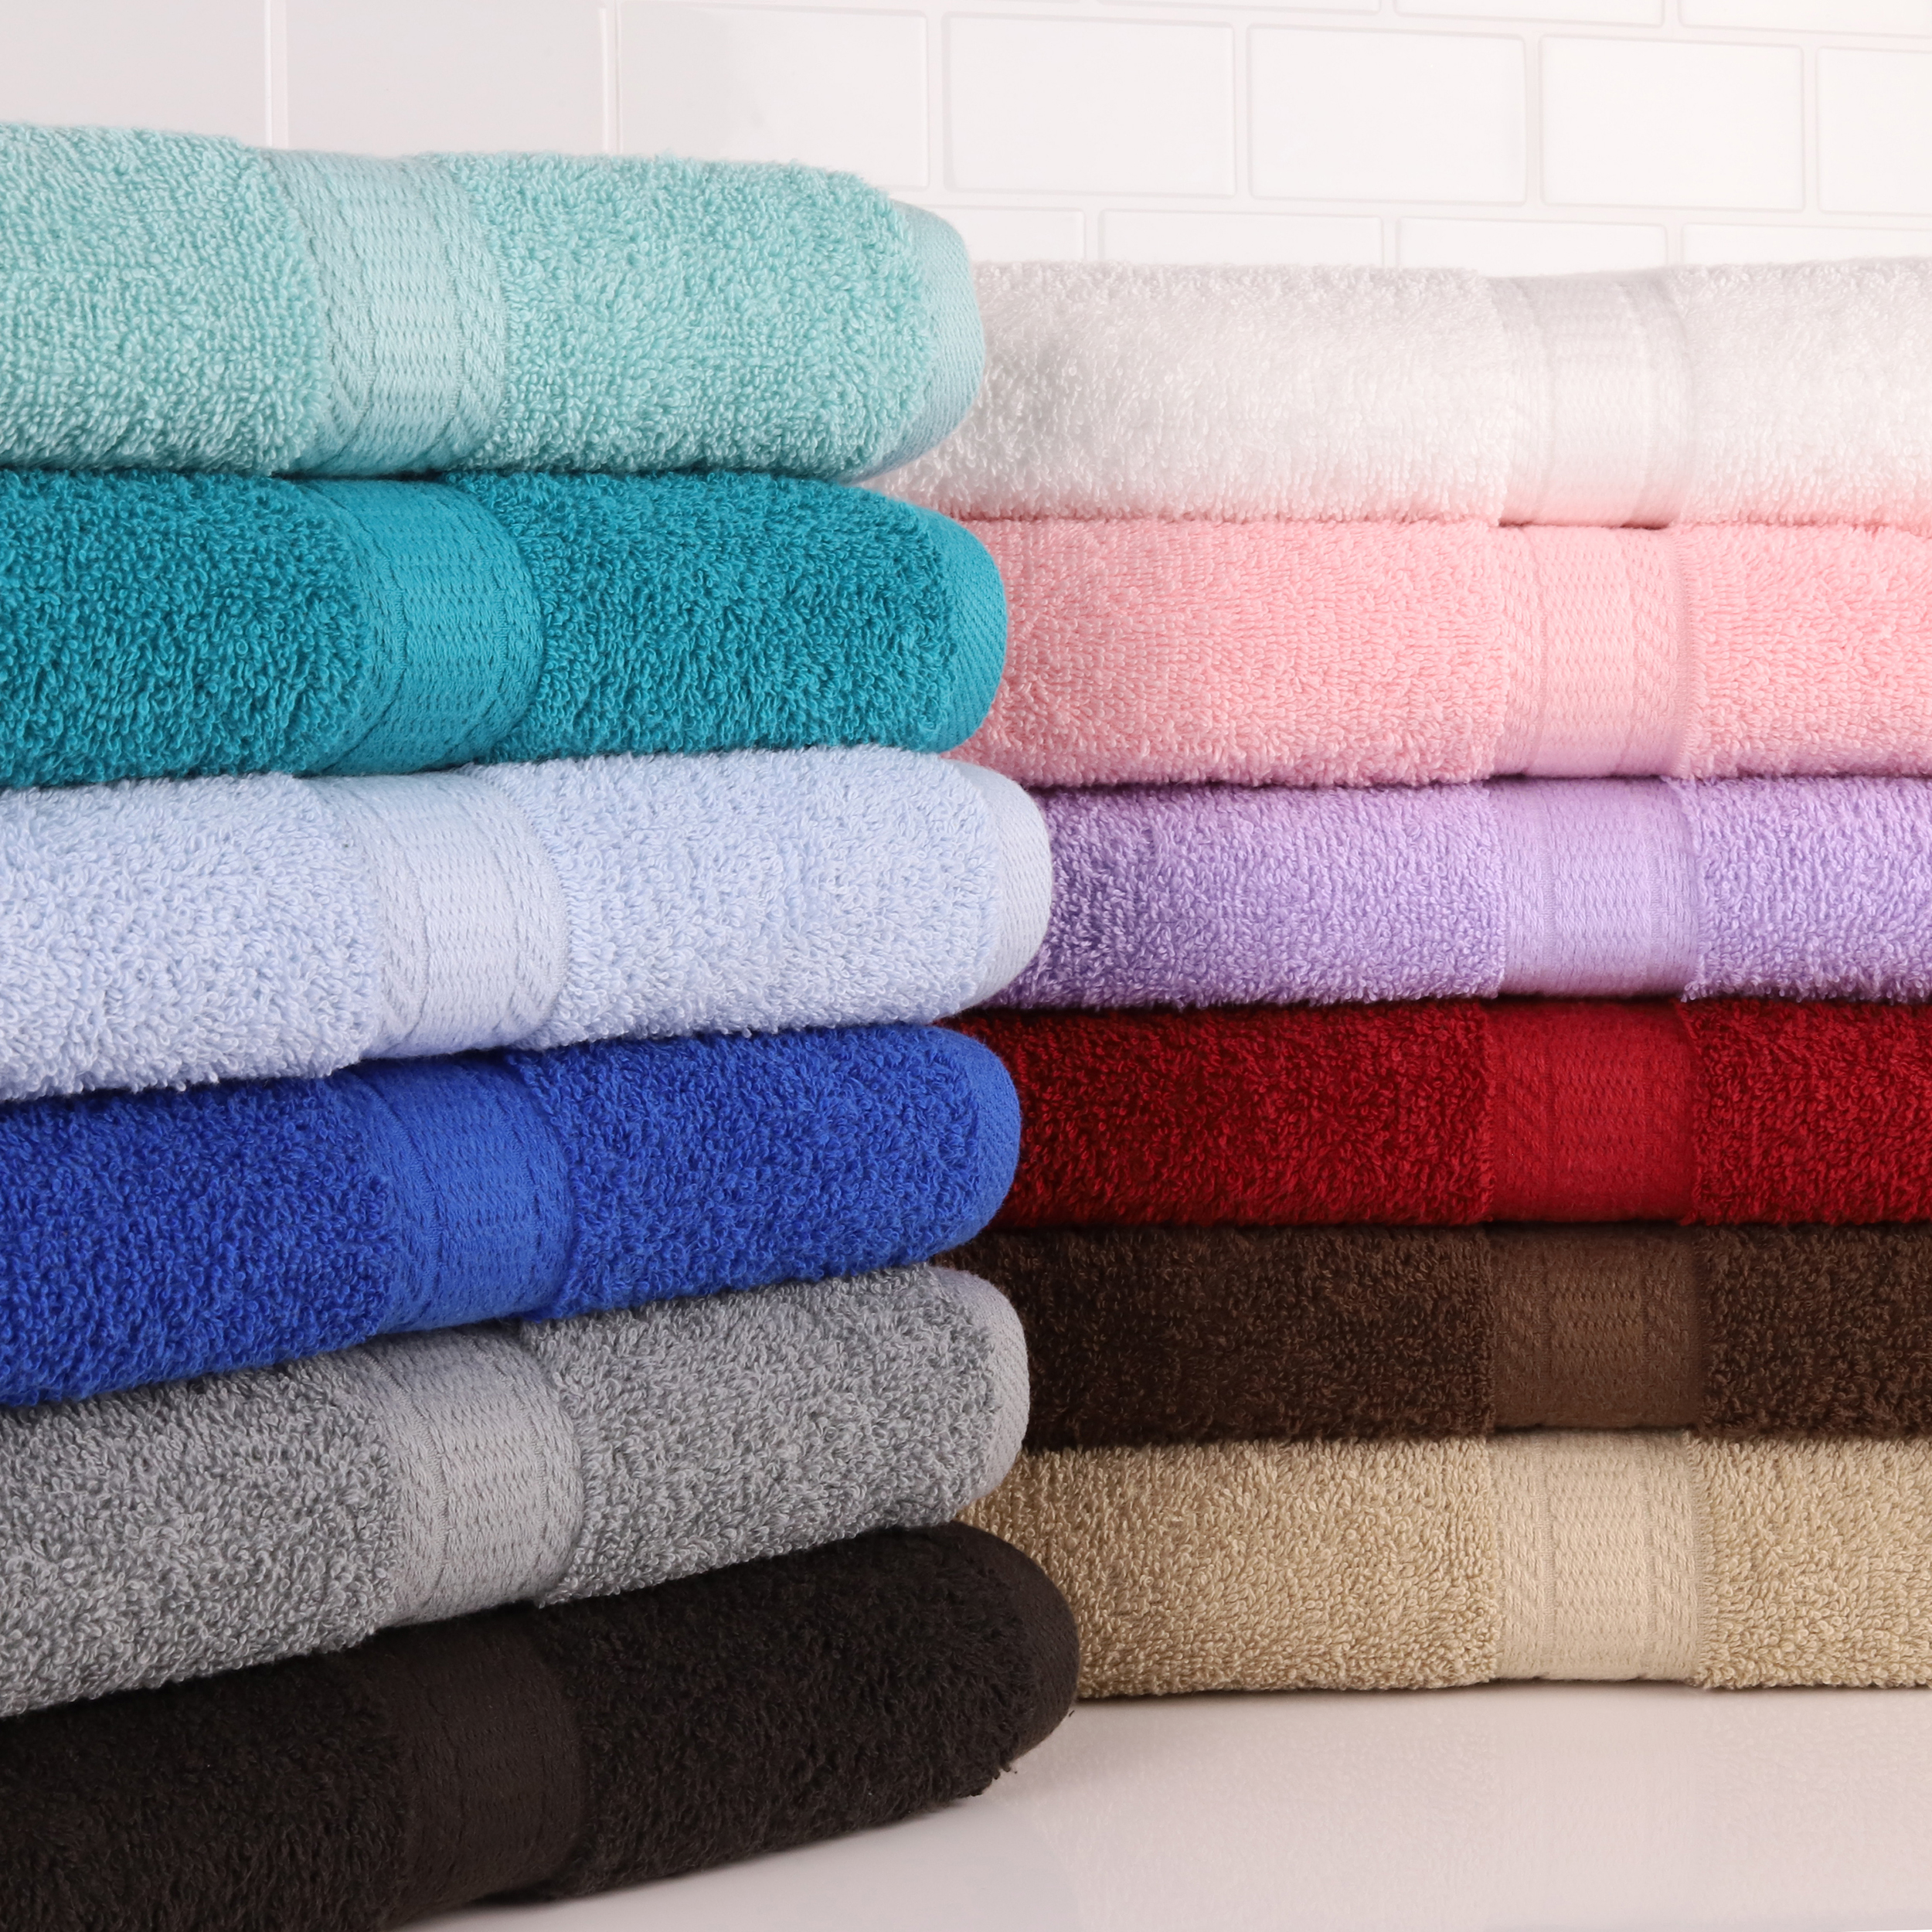 Mainstays Solid Bath Towel, Rich Black - image 4 of 9